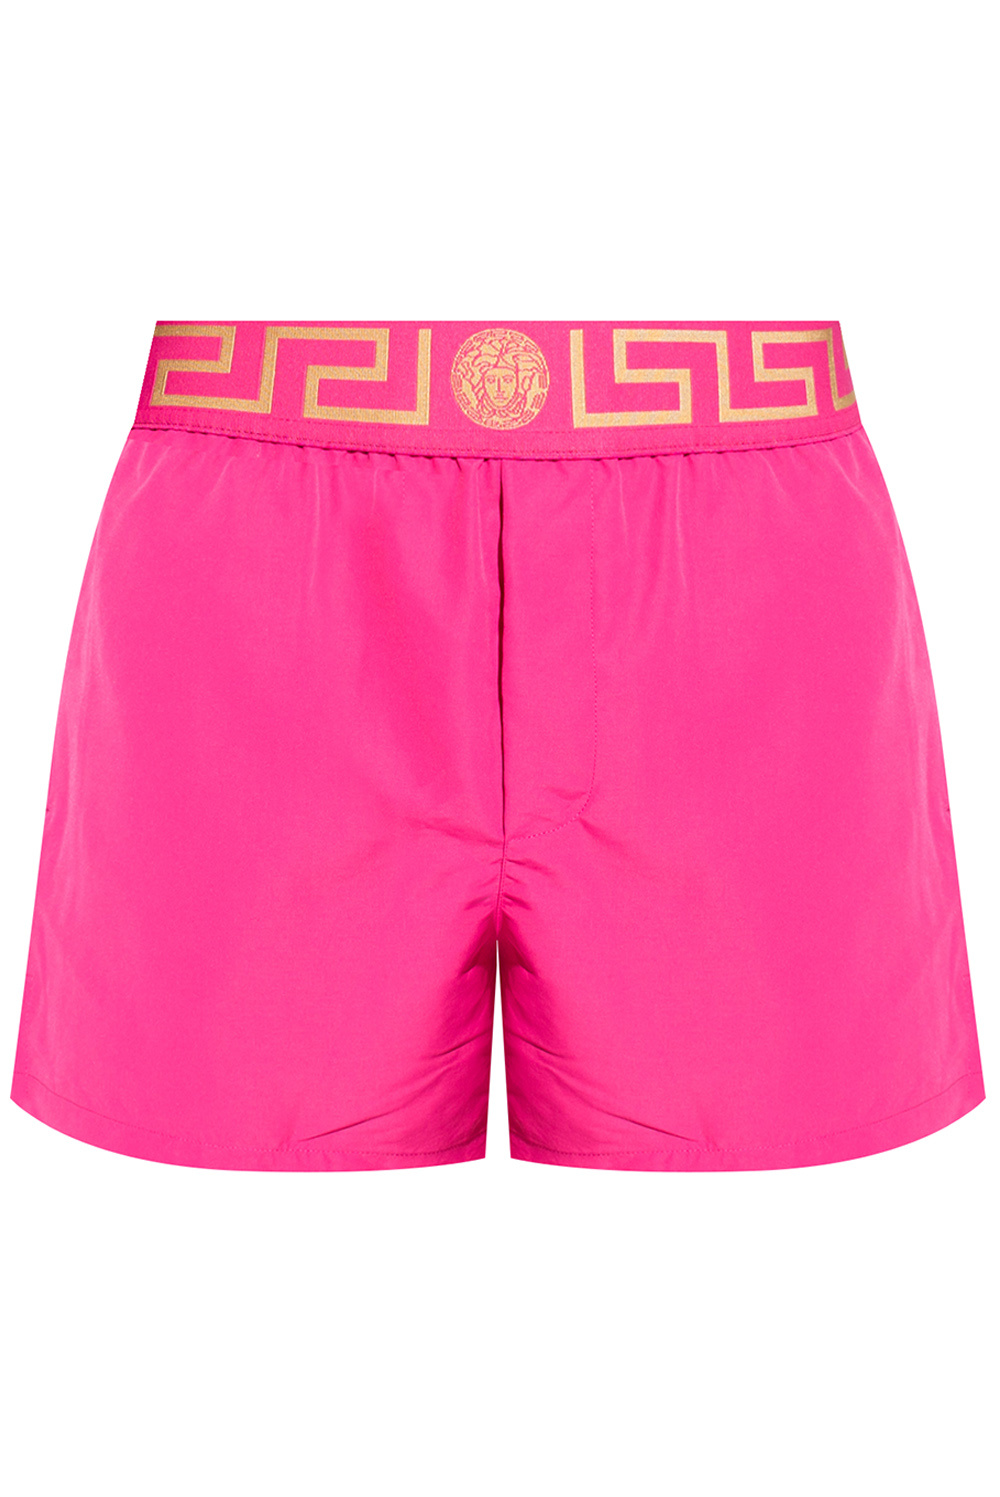 Versace Swim shorts with logo | Men's Clothing | Vitkac